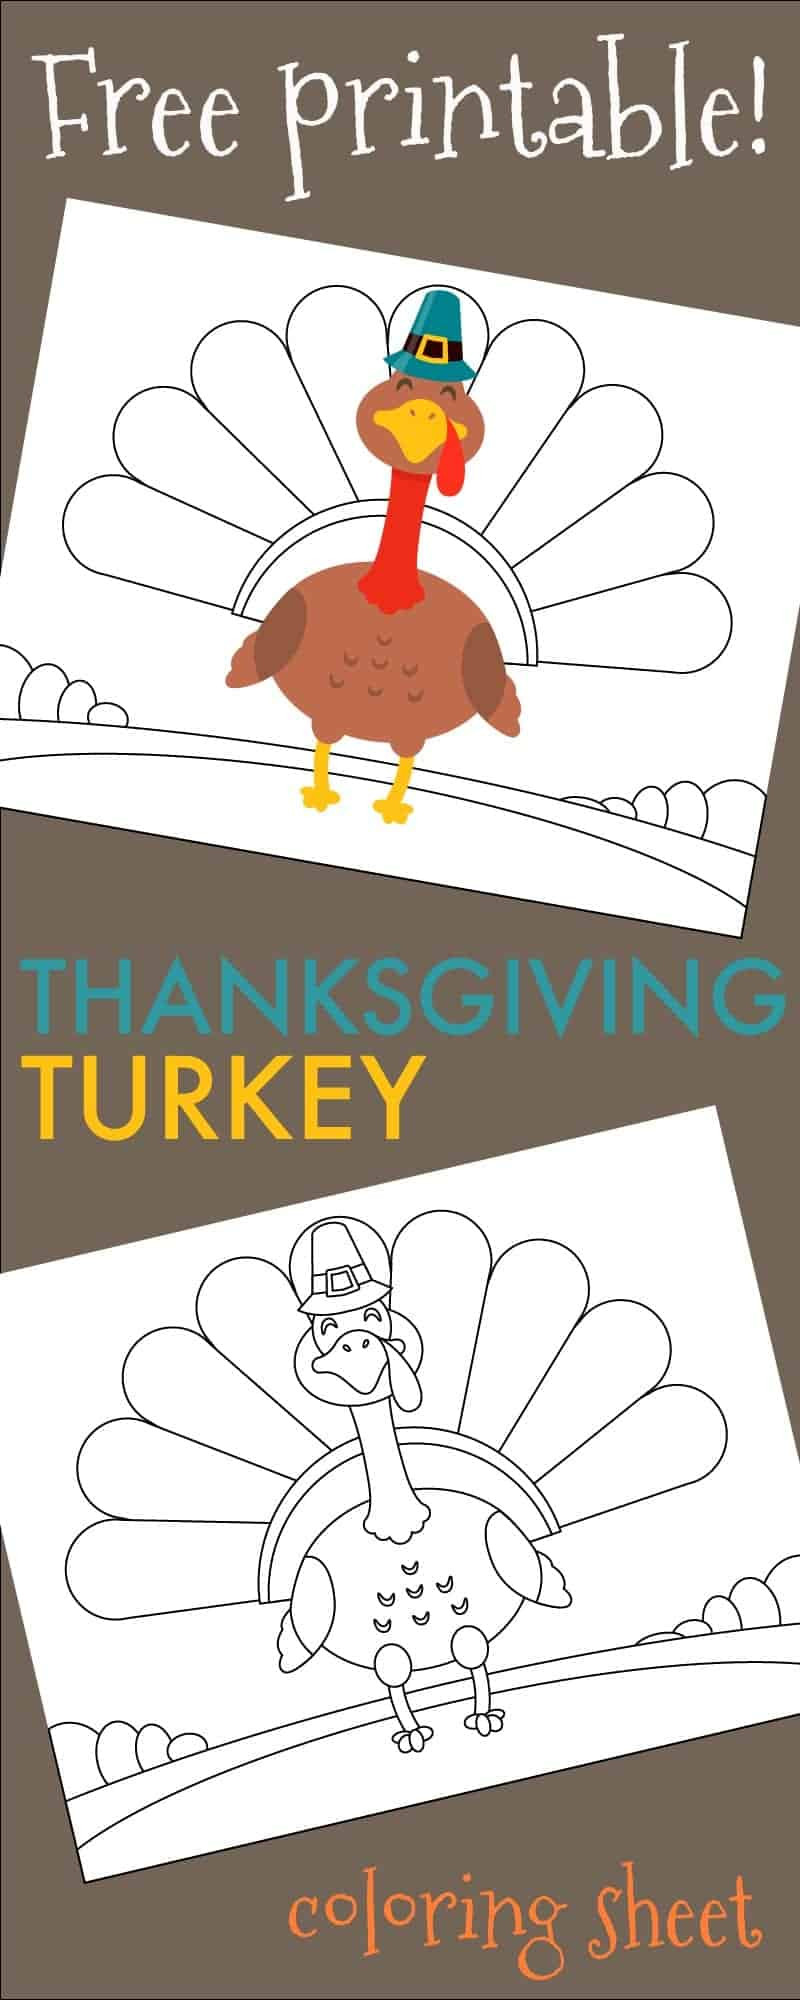 Free Turkey For Thanksgiving
 Thanksgiving Turkey Coloring Sheet Free Printable 730